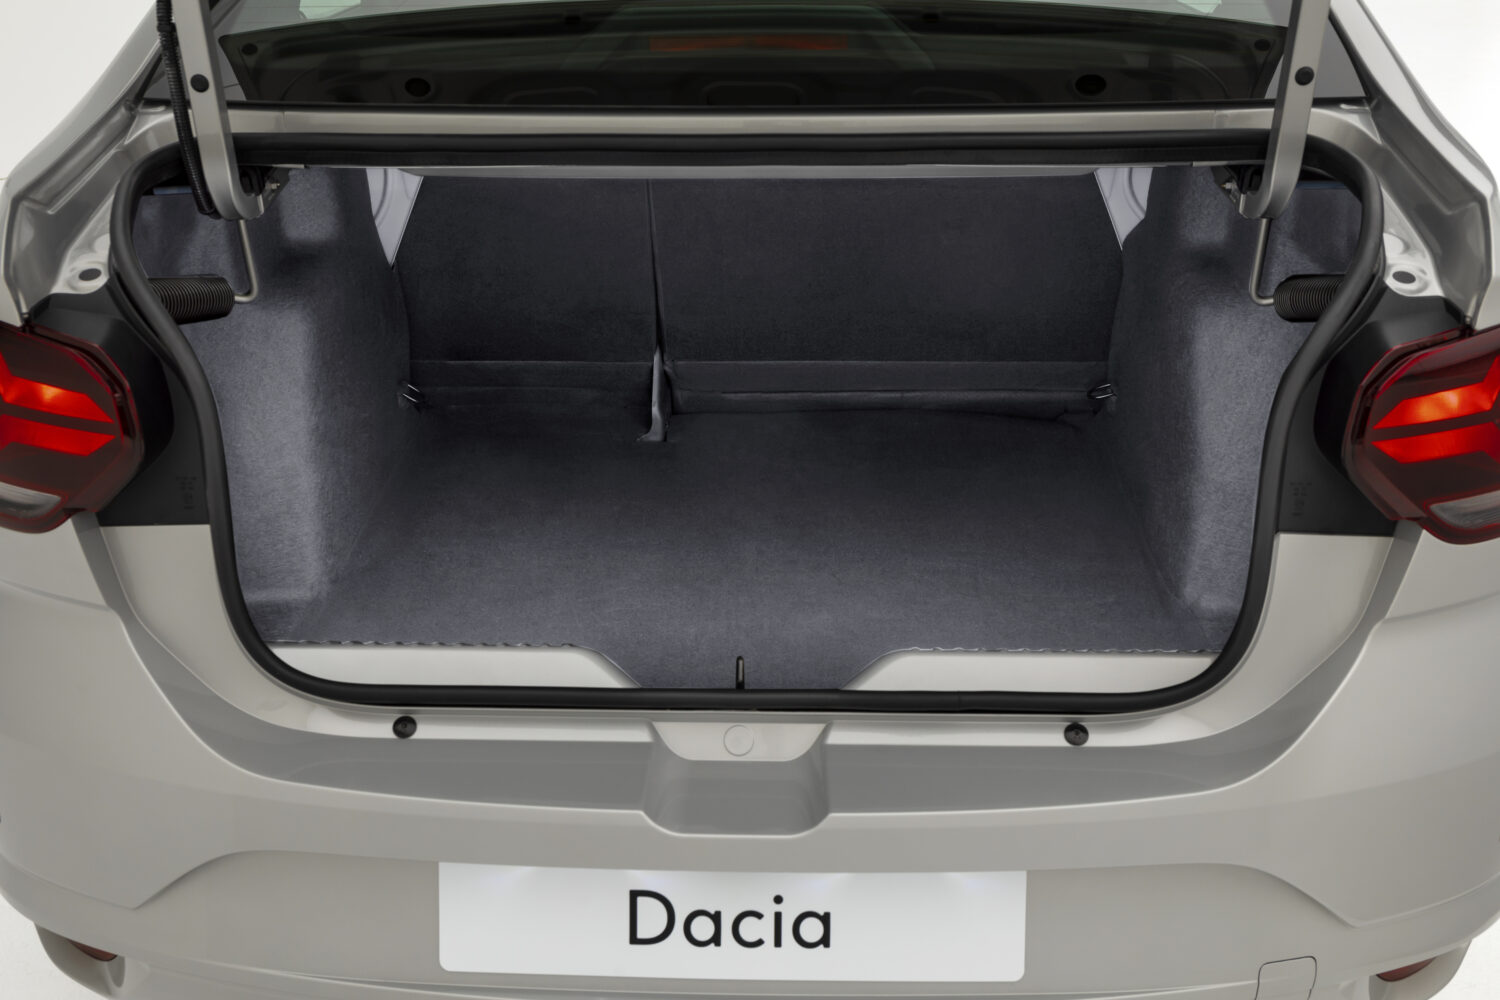 2020 - Nouvelle Dacia LOGAN